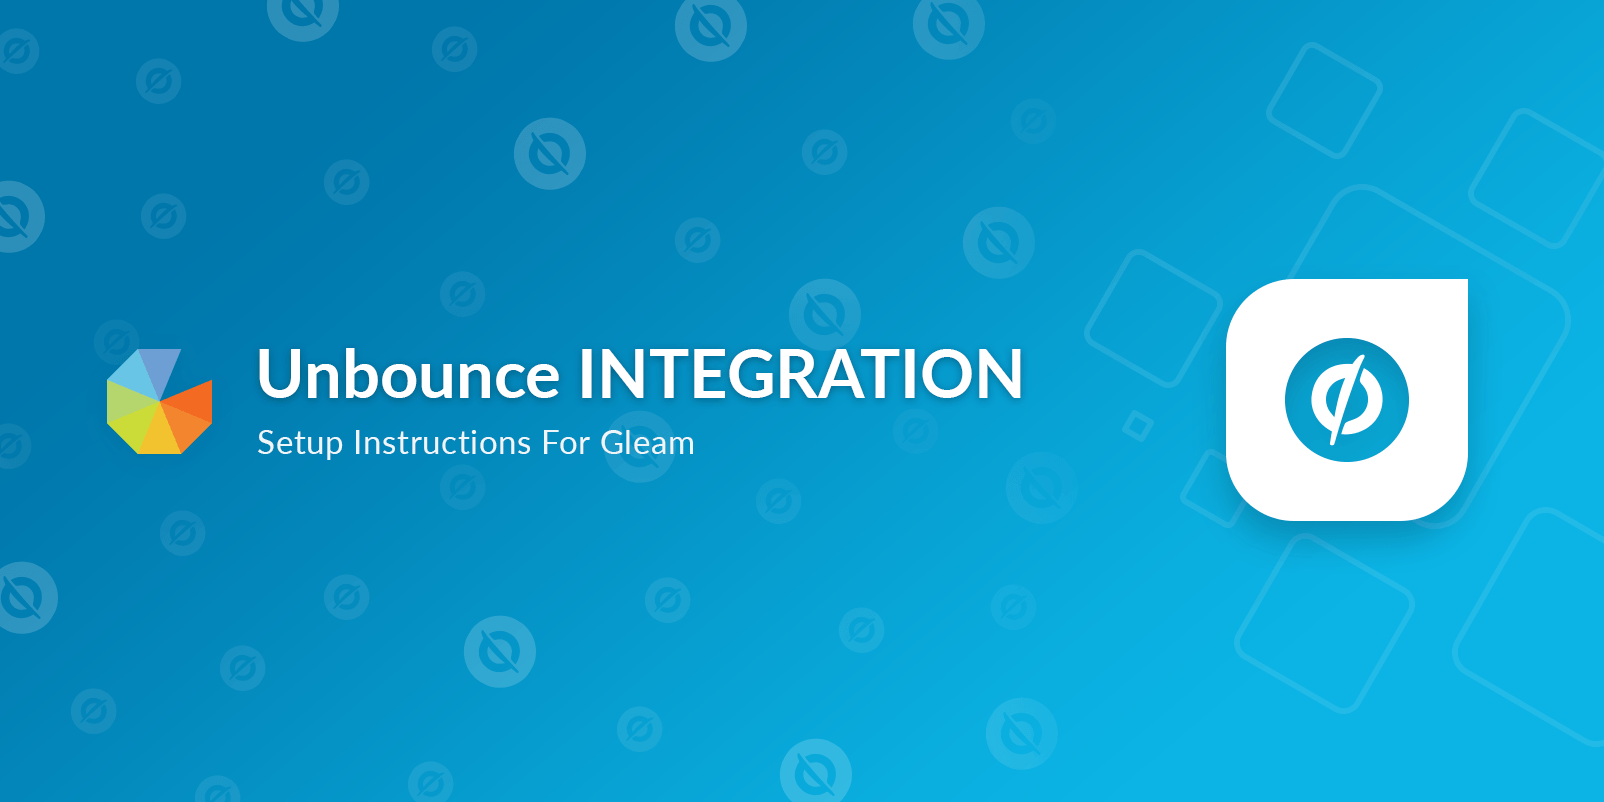 Unbounce integration setup instructions for Gleam